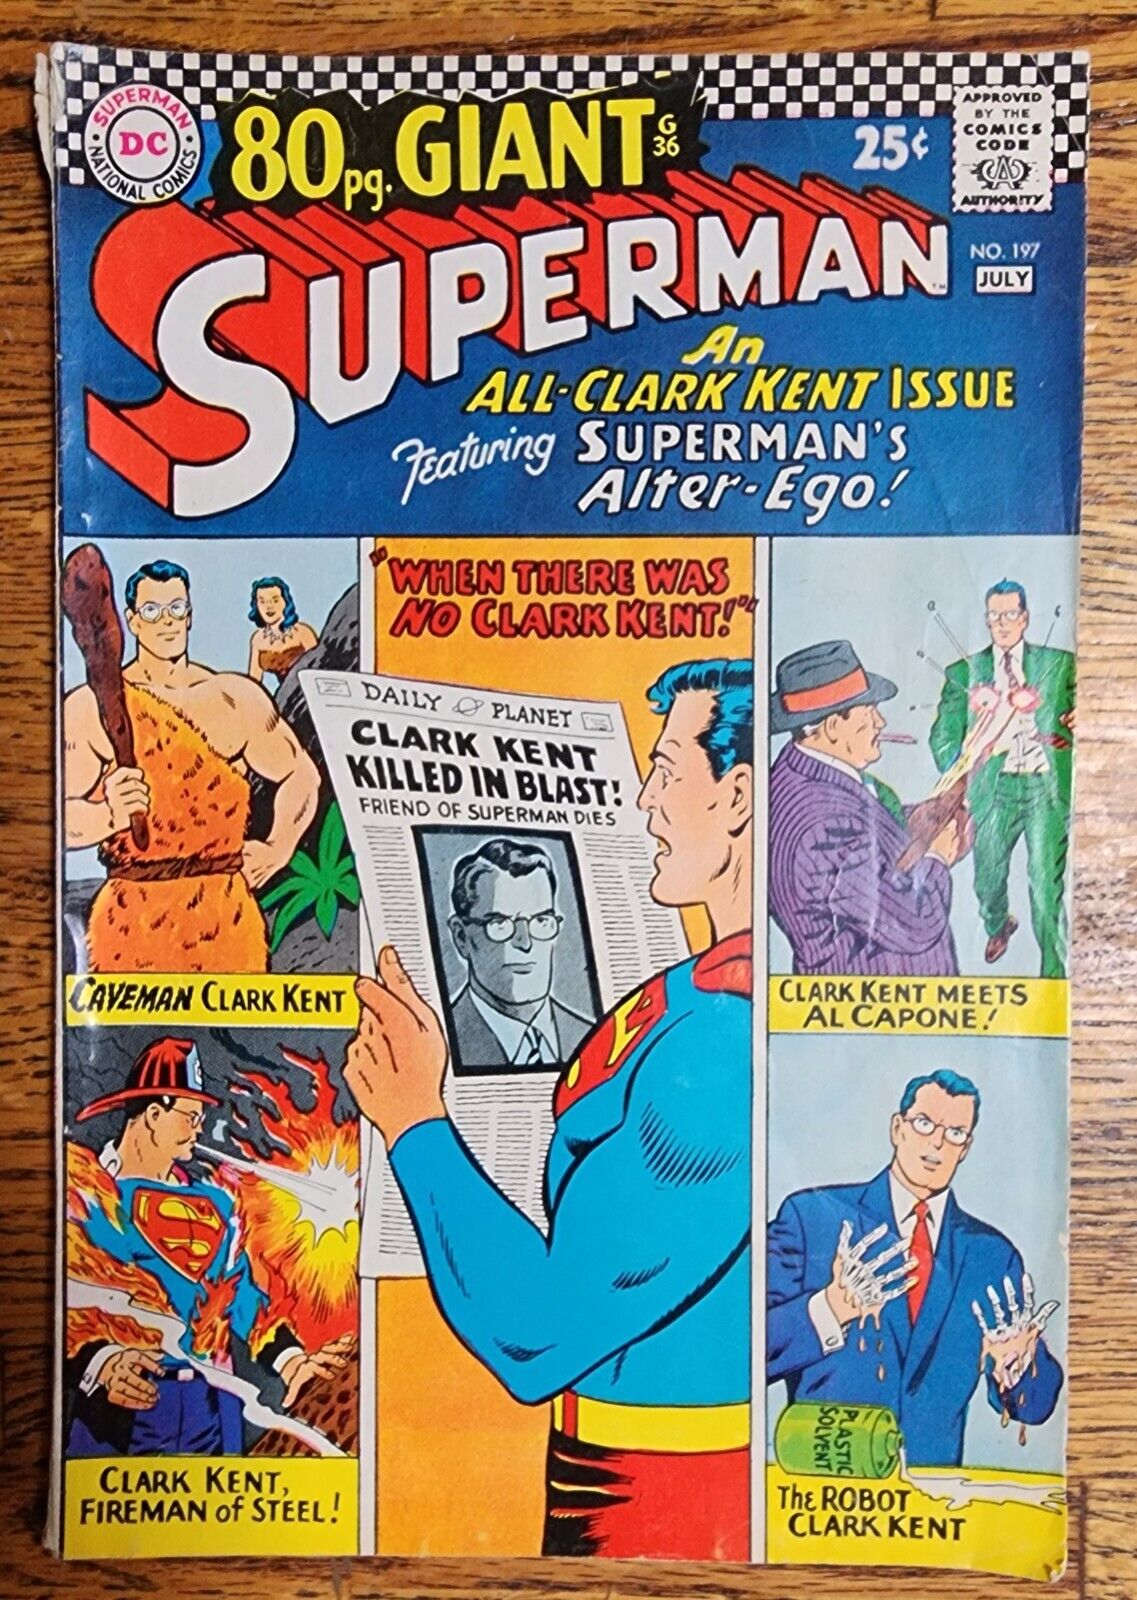 DC Comics-80 Pg Giant Superman-Supermans Alter Ego July 1967-No 197